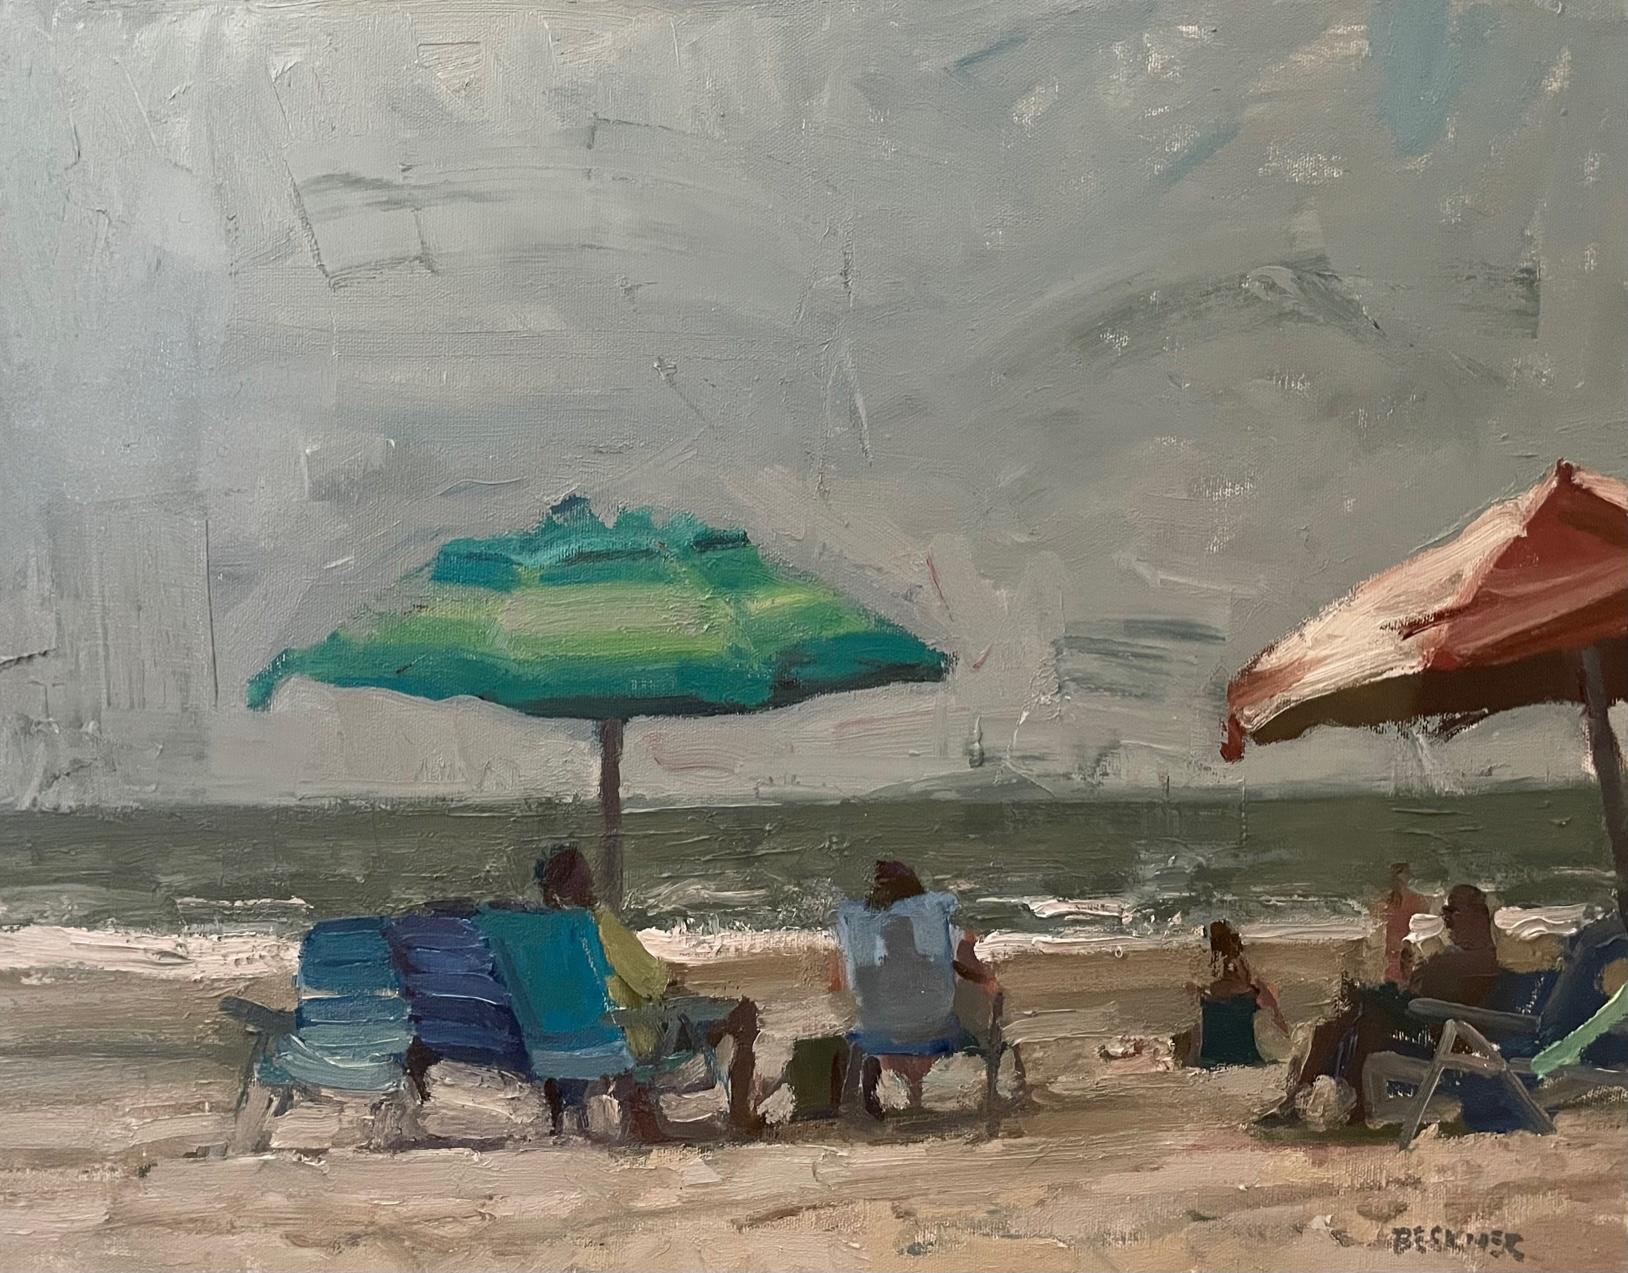 GREEN UMBRELLA  Oil on Panel  Impressionism  20x 16 Dana Point CA Beach - Gray Landscape Painting by Jim Beckner